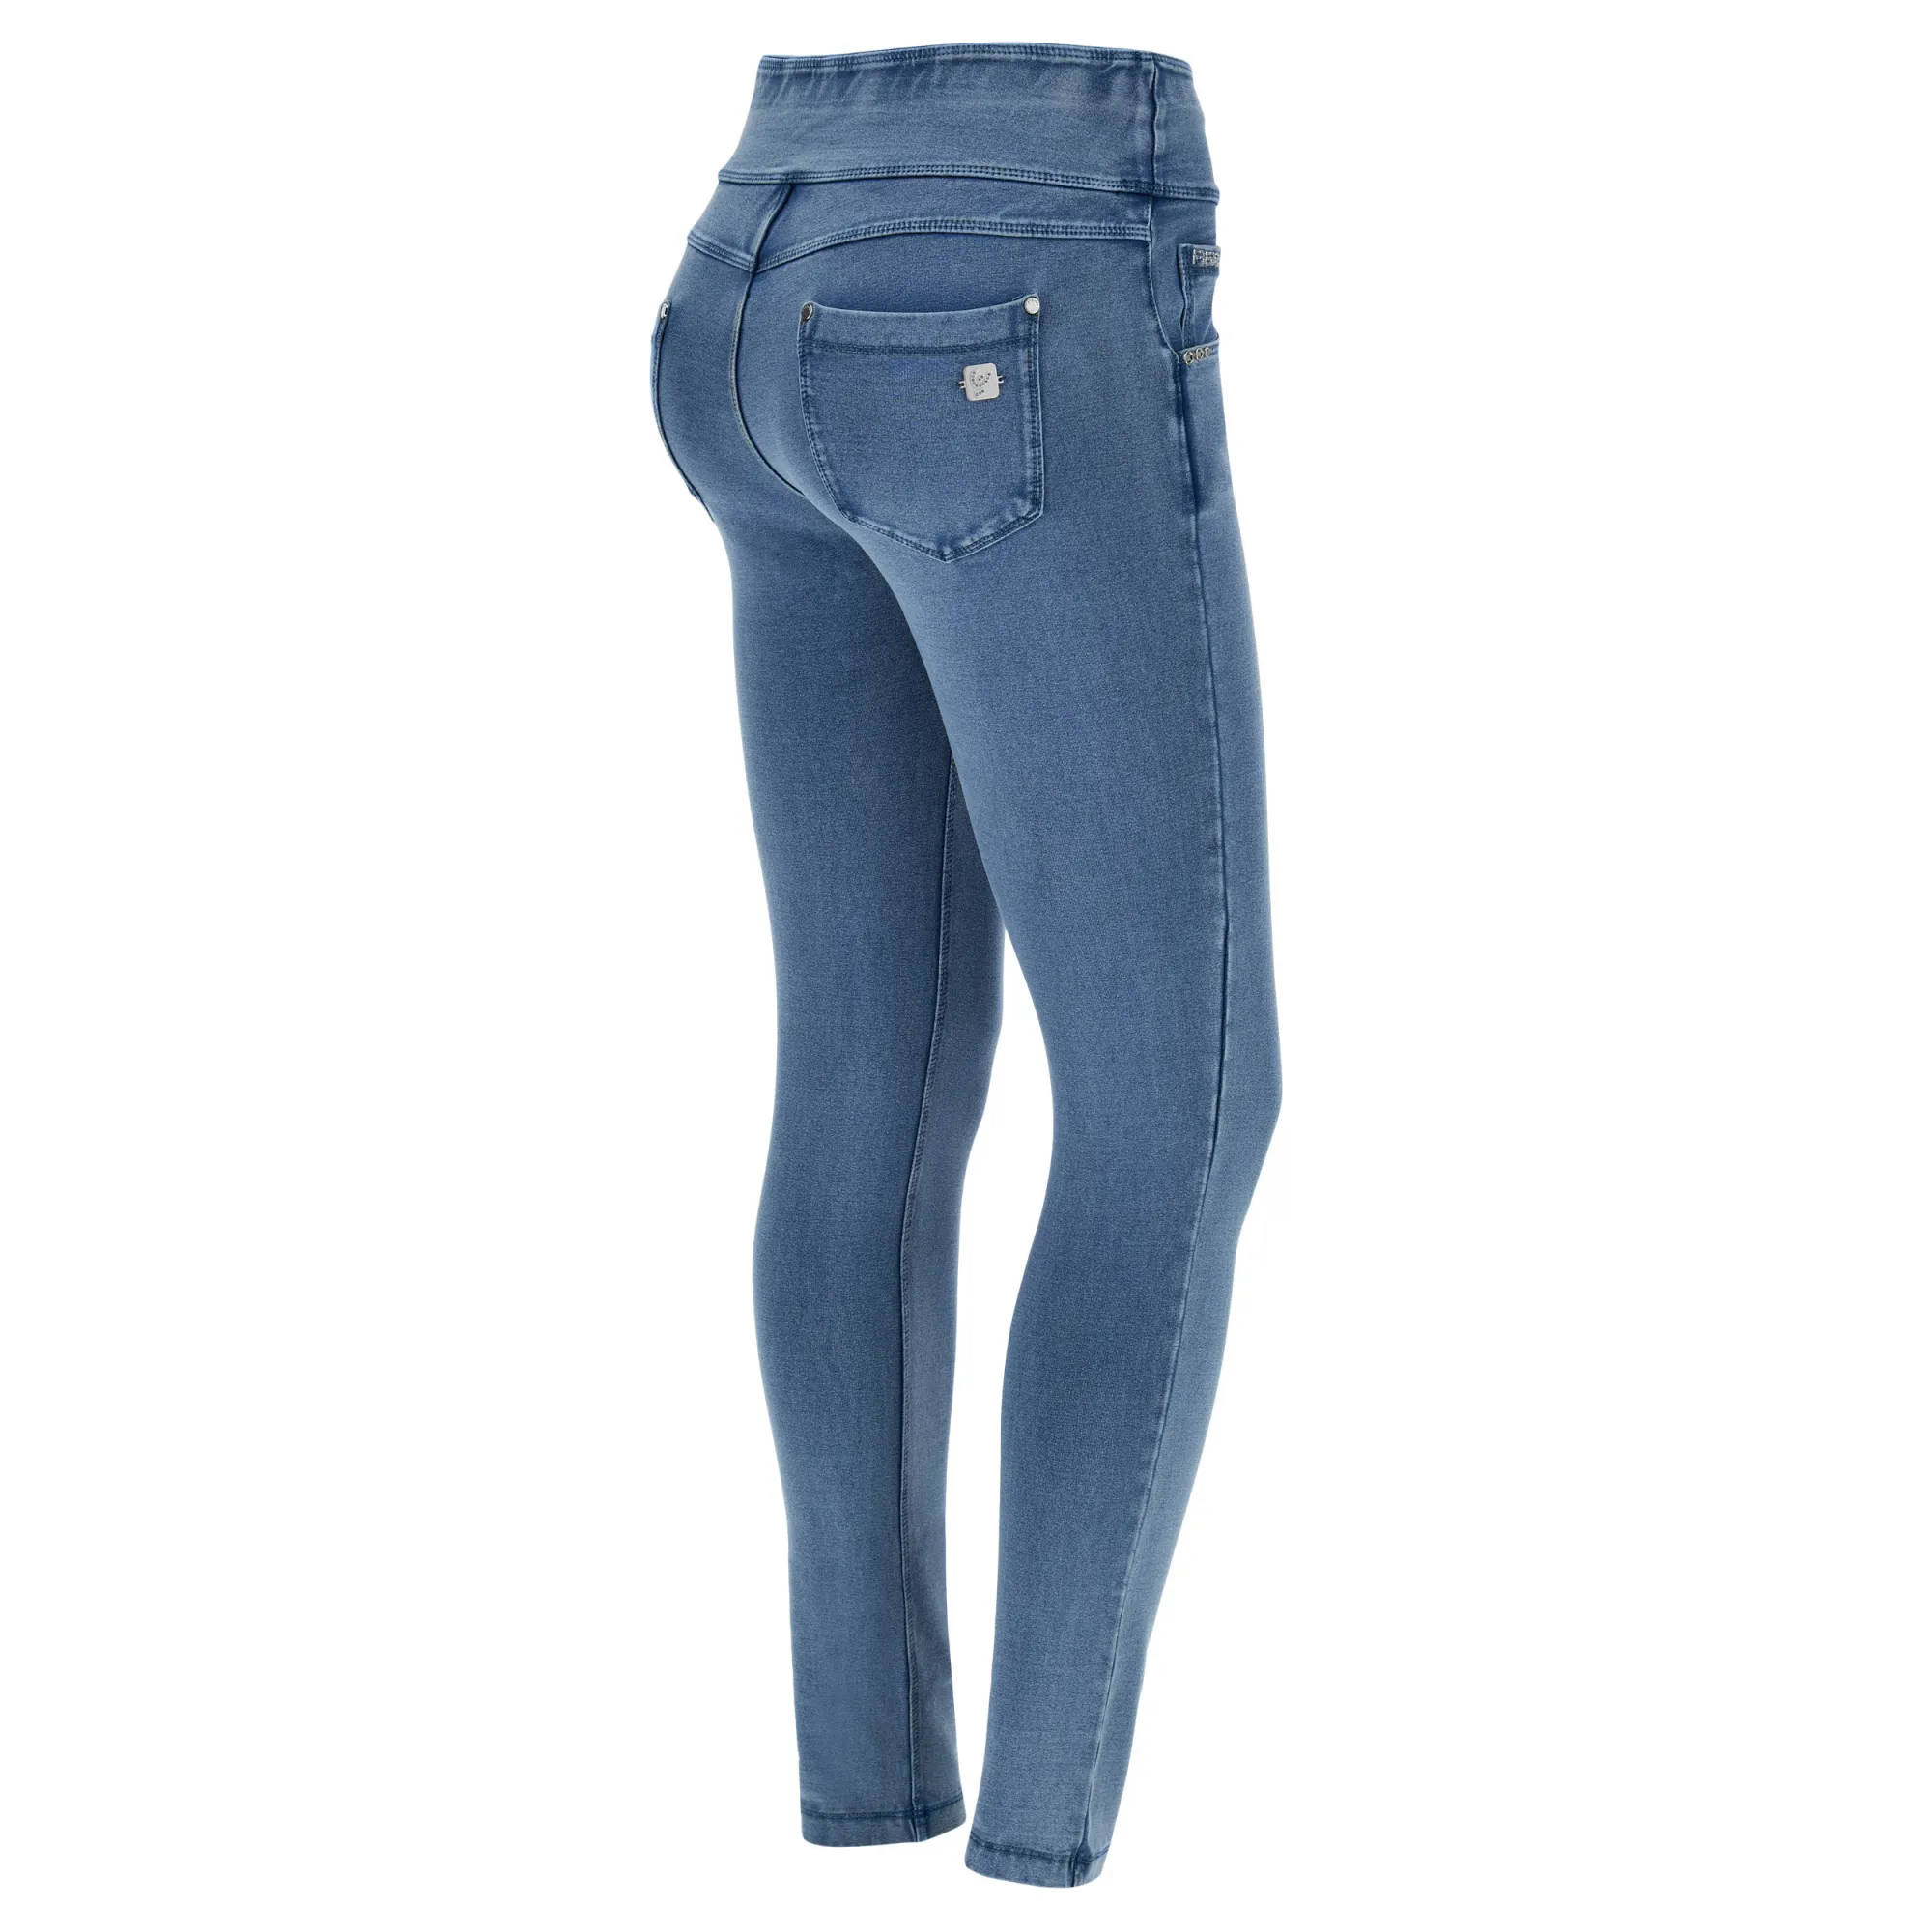 Freddy N.O.W.® Yoga Damen Comfort Jeans - Mid Waist Skinny - umschlagbarer Taillenbund - Hellblau - Blaue Nähte - J4B